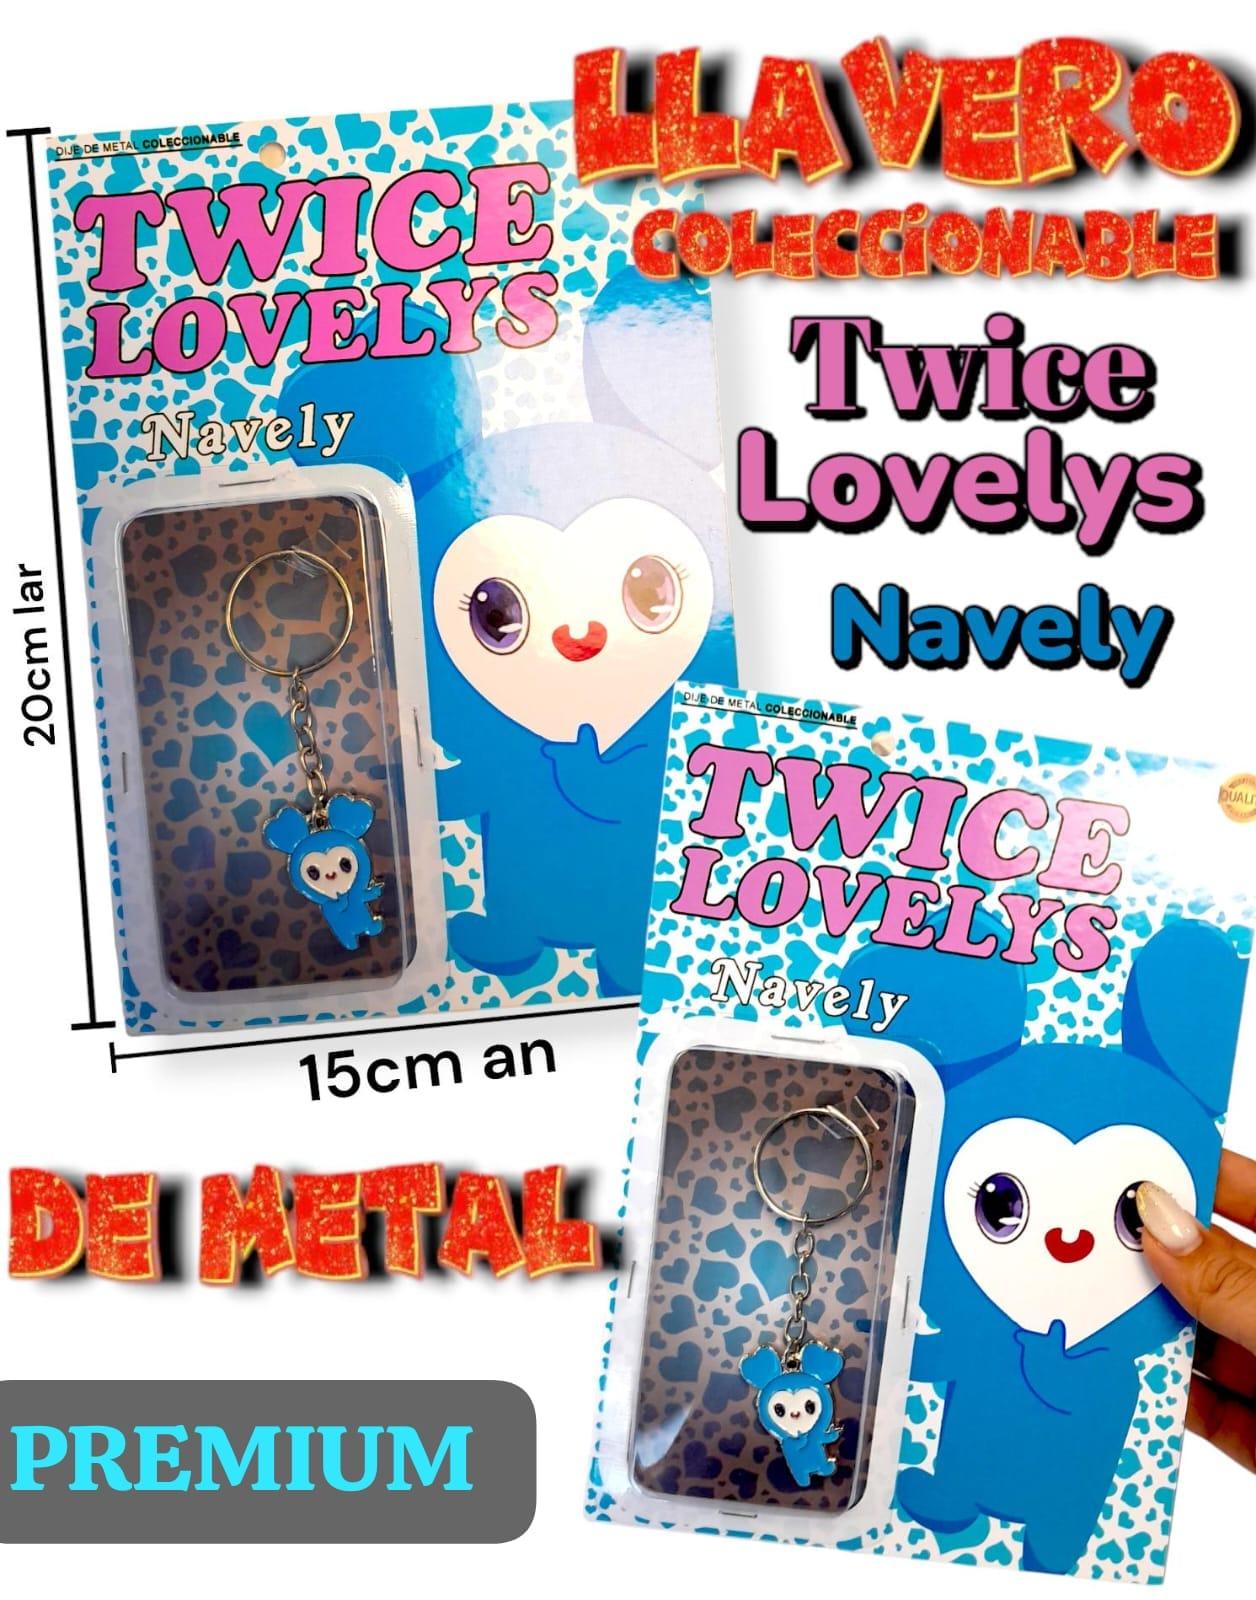 Llavero Premium Coleccionable de Mertal  Twice Lovelys (NAVELY)